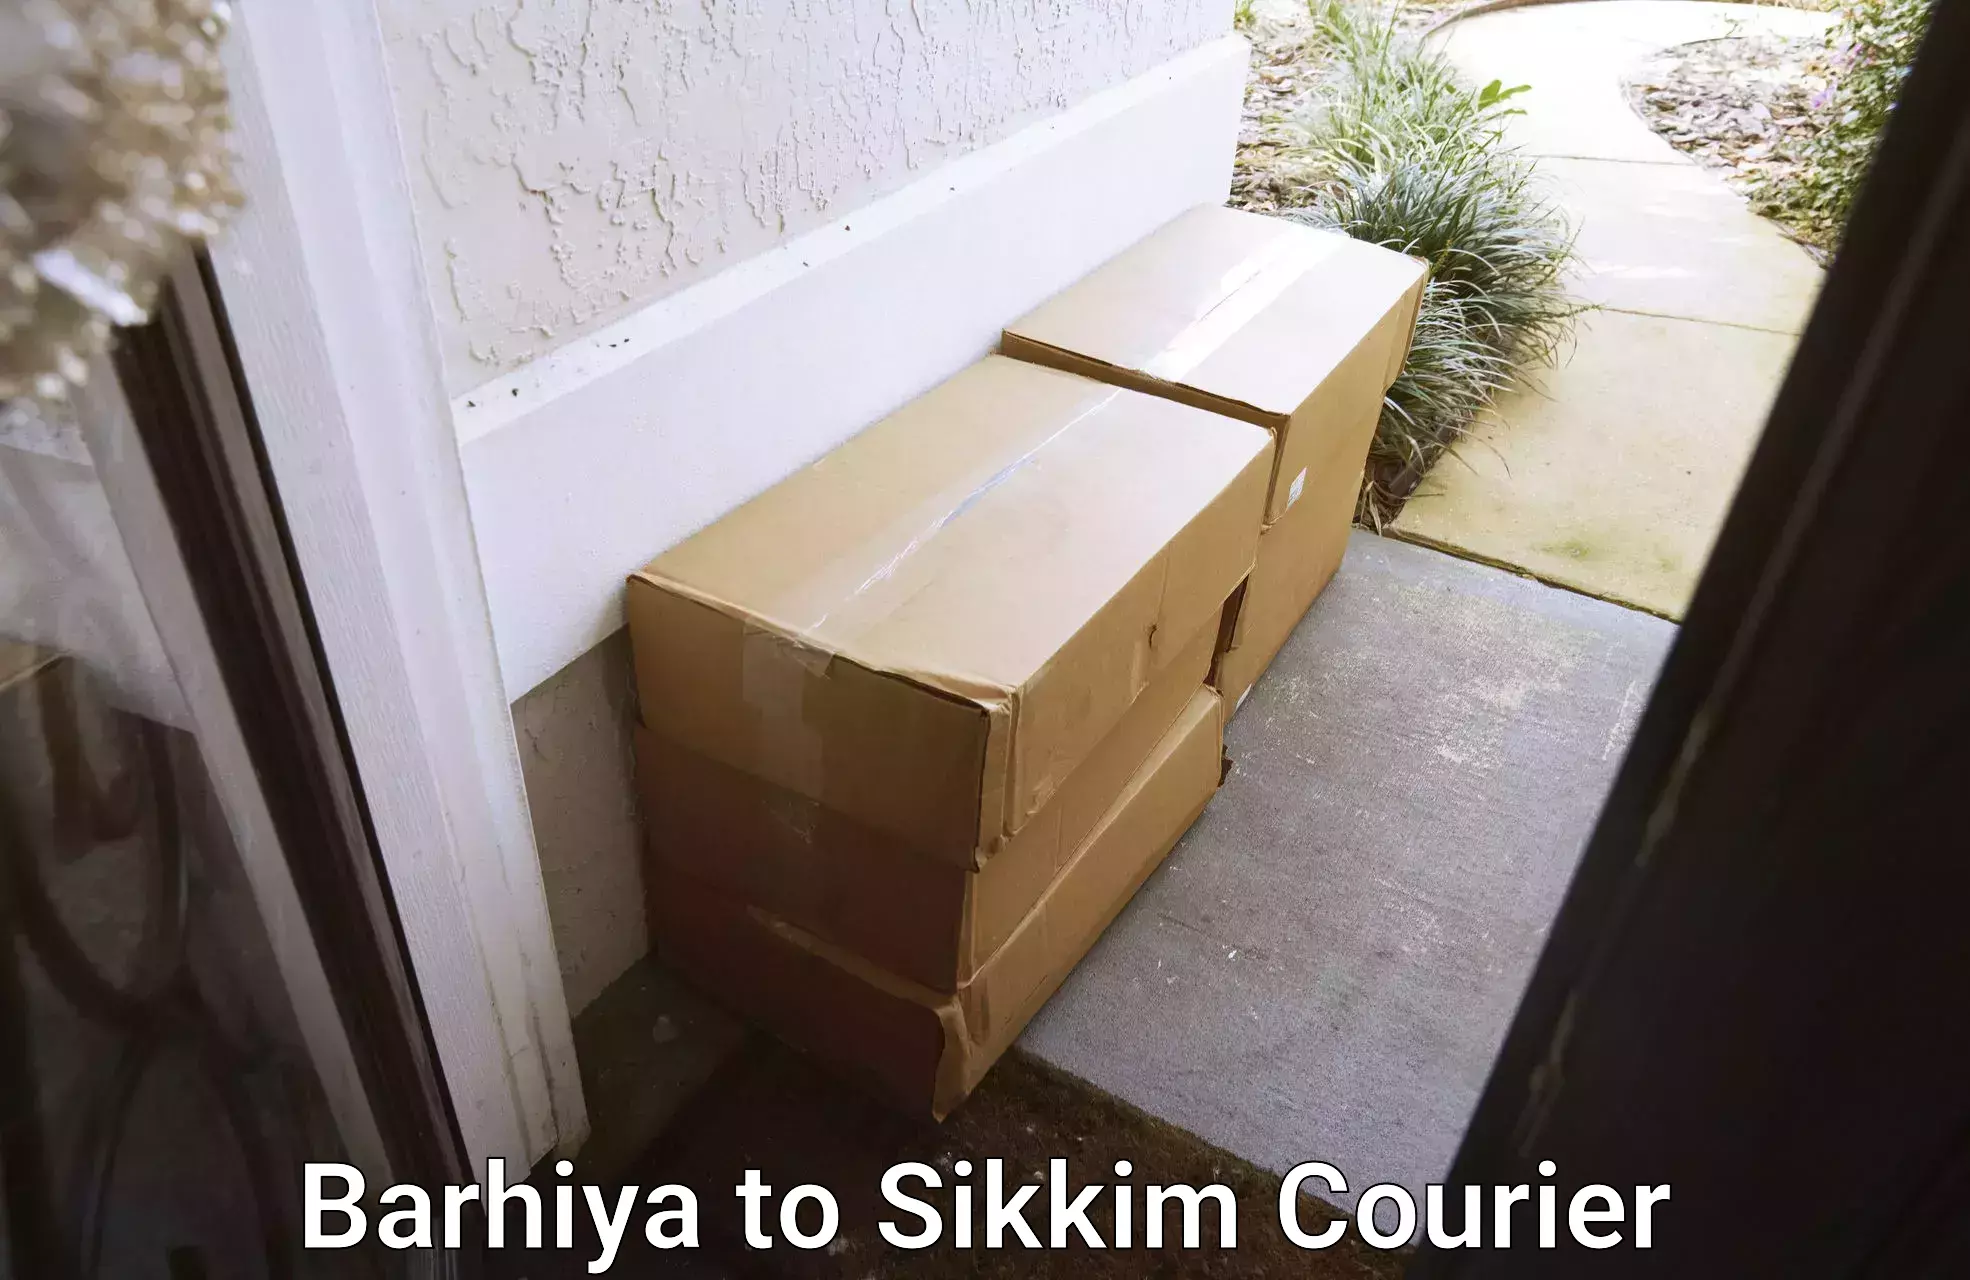 Professional movers Barhiya to Pelling